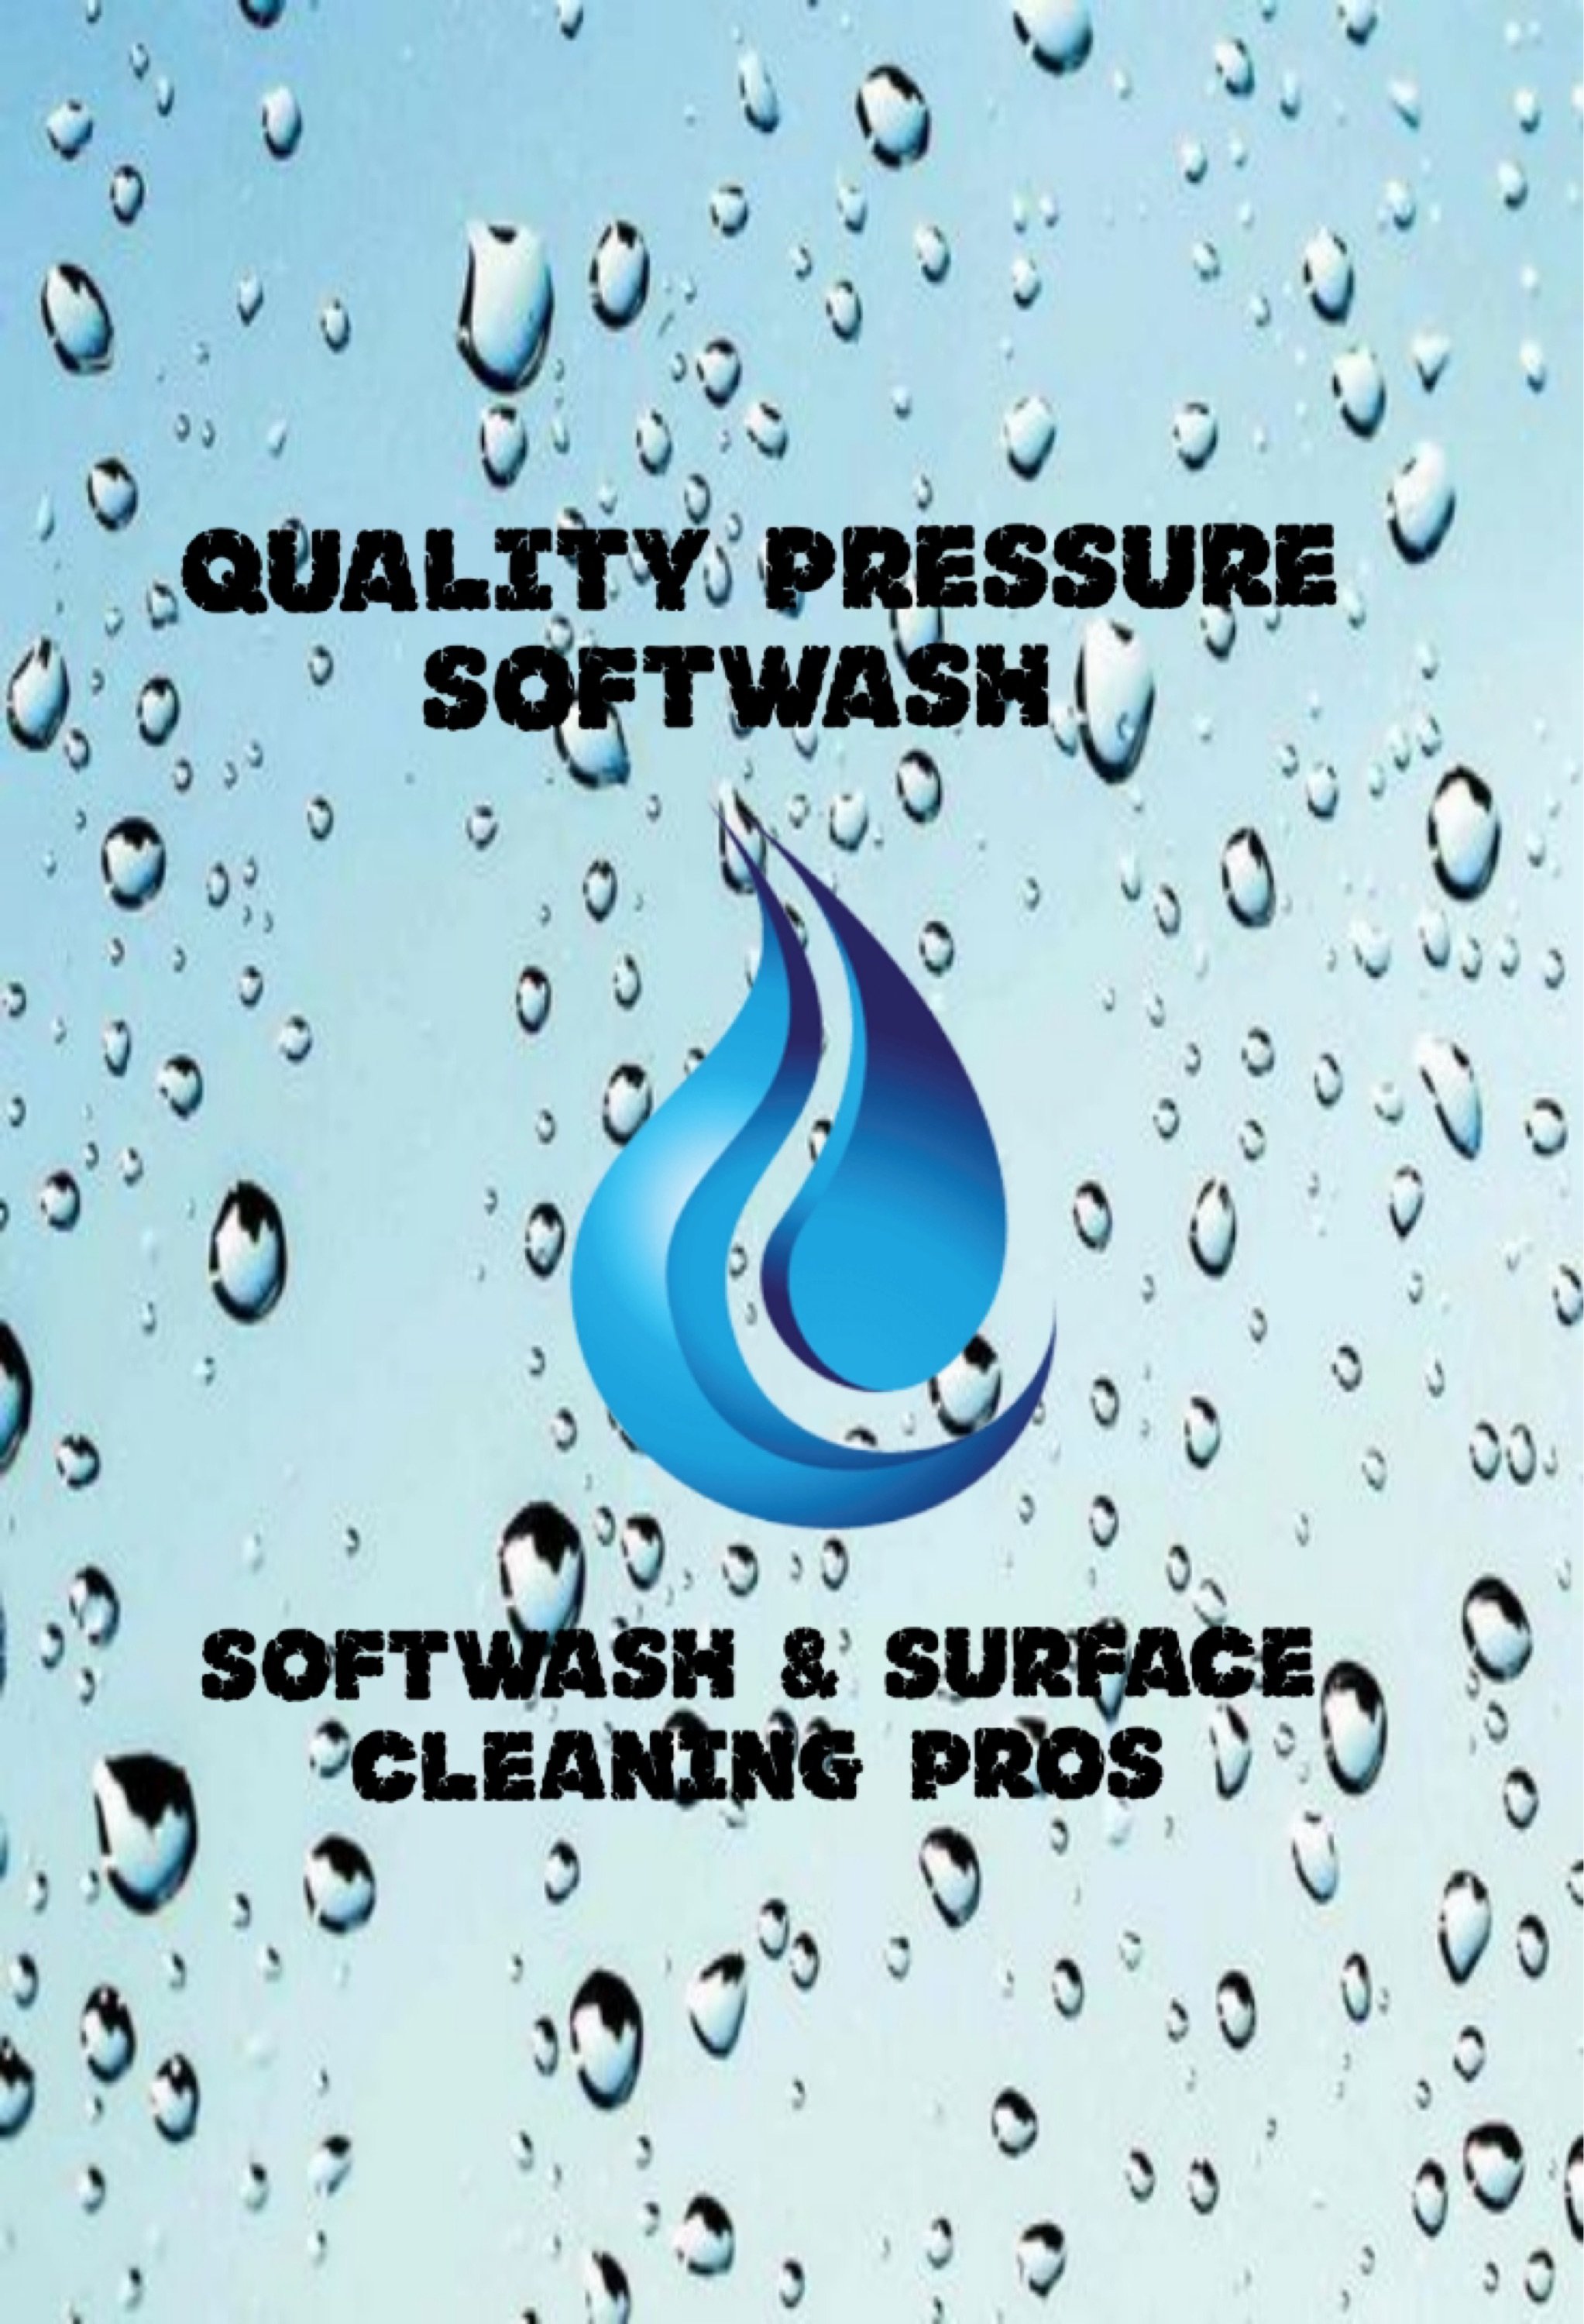 Quality Pressure - SoftWash & Sanitation Services Logo